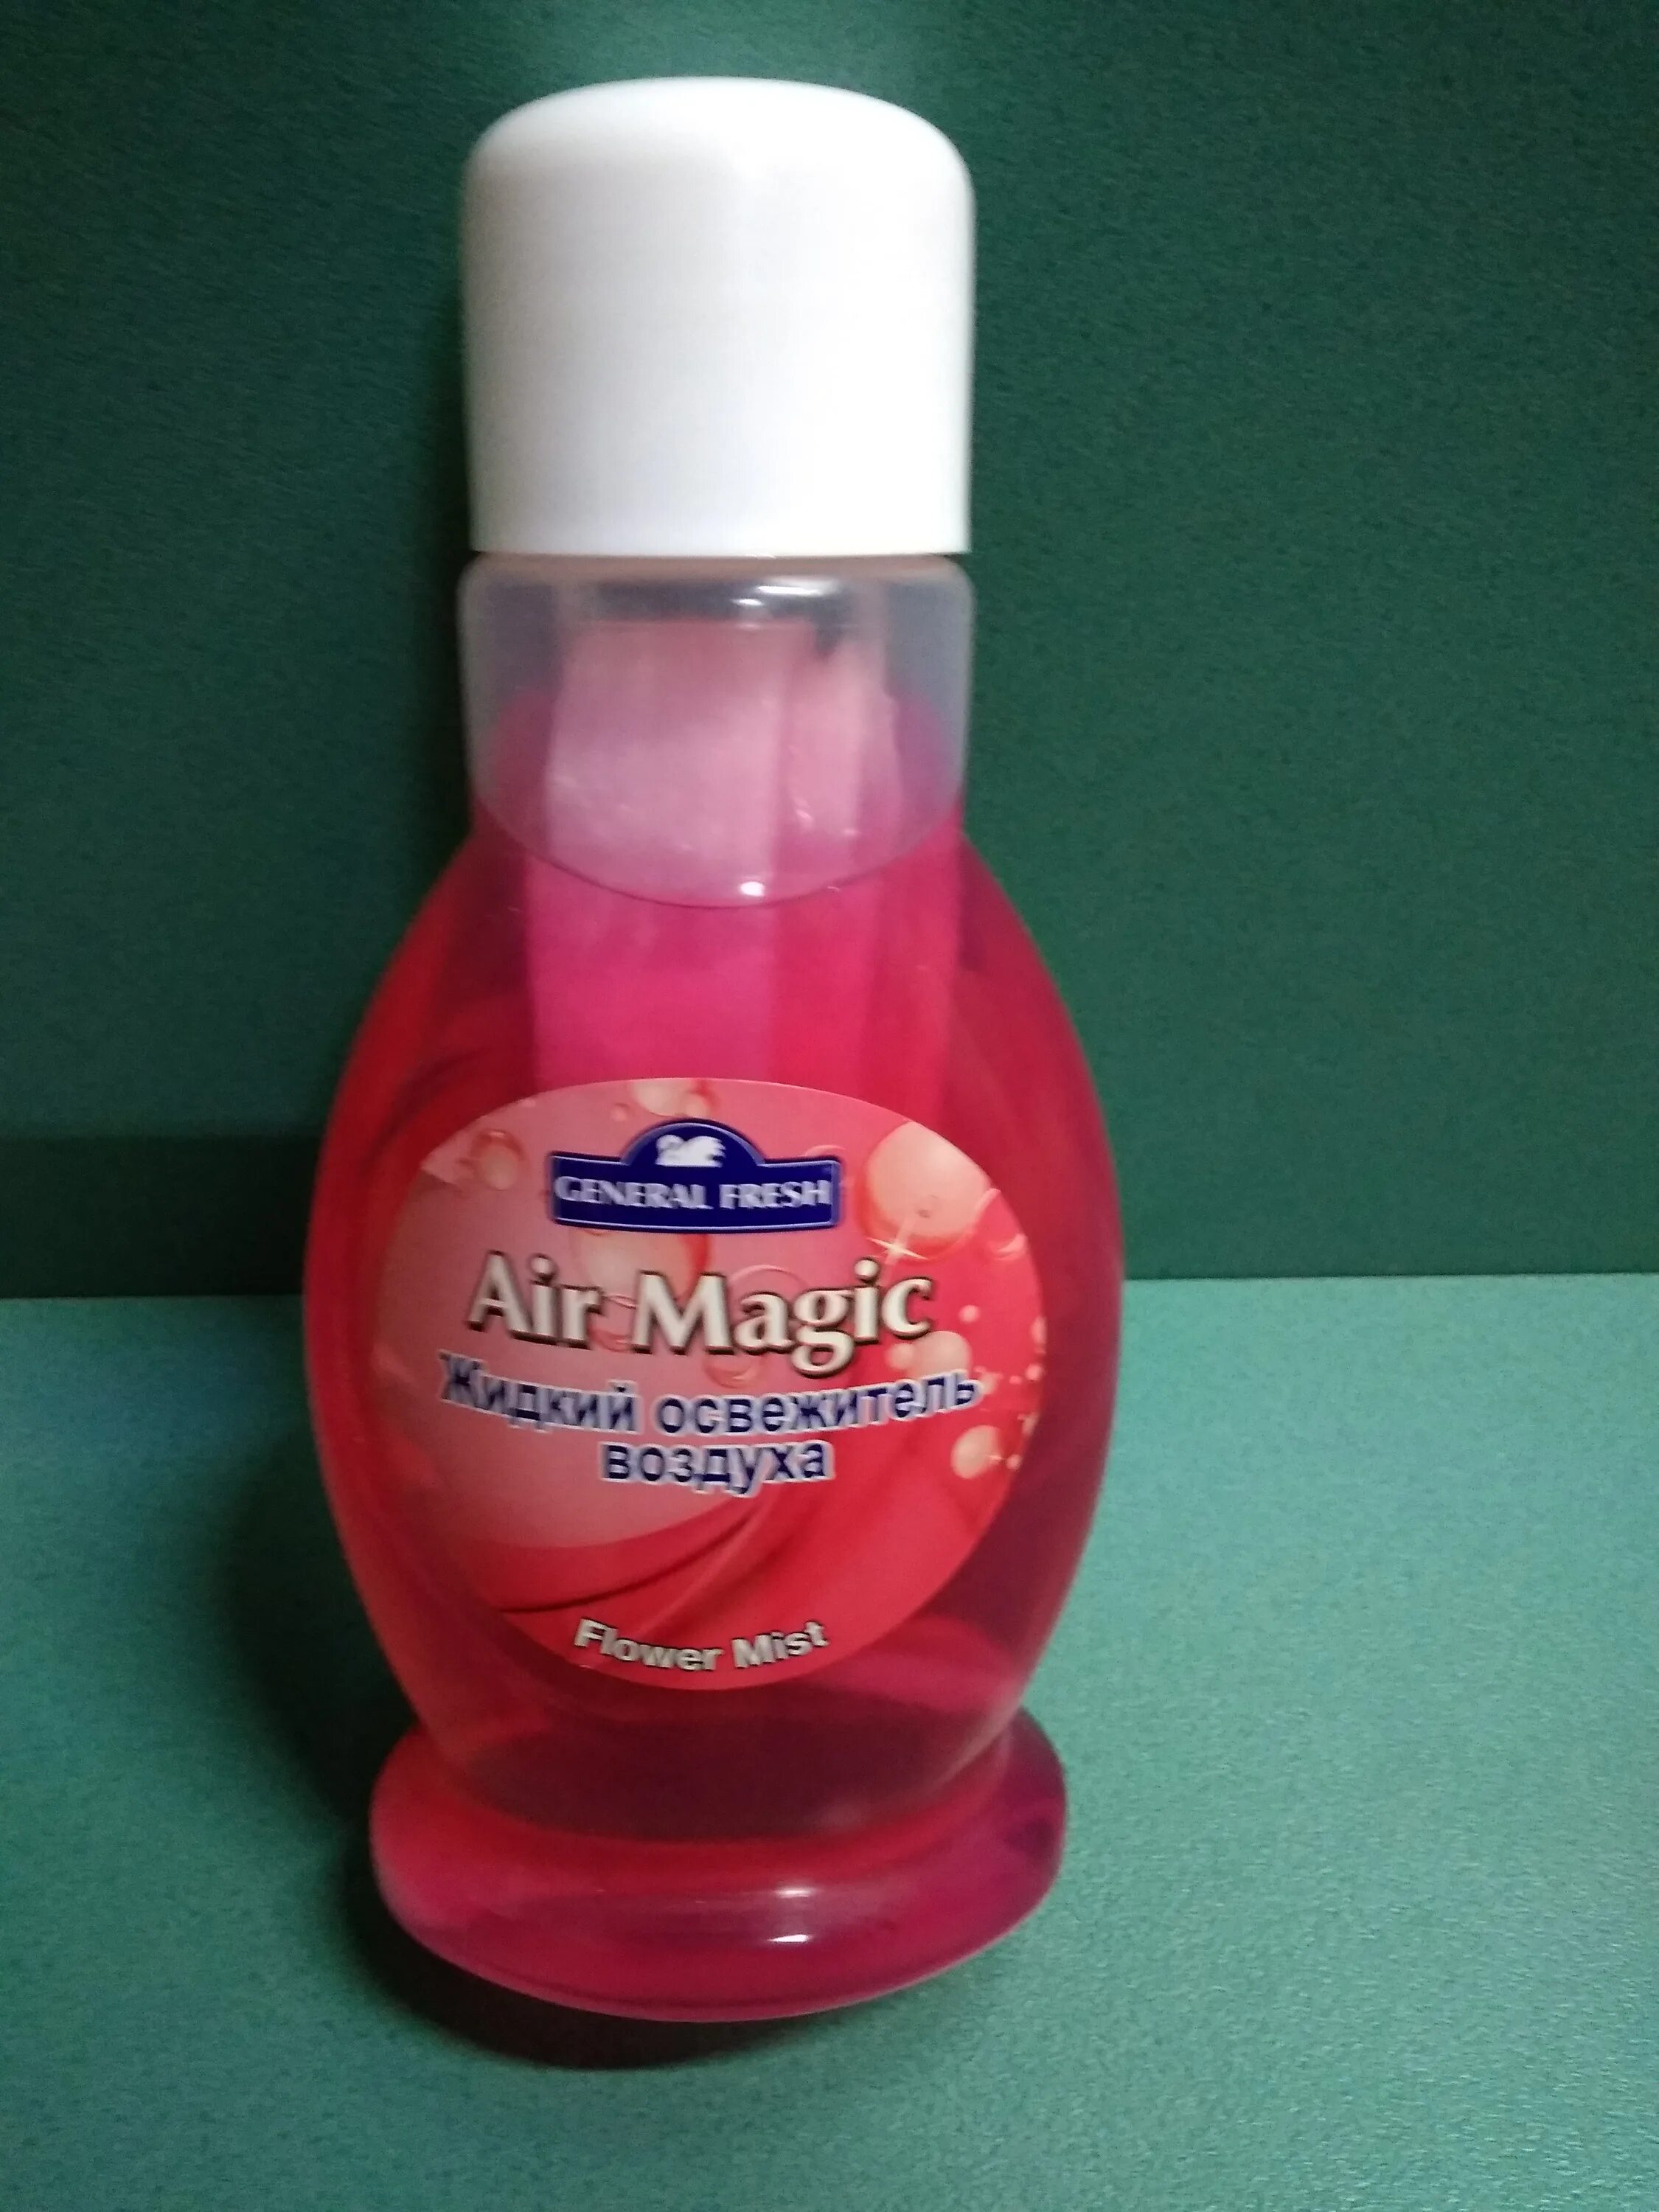 Cherry magic 12. Air Magic ароматизатор 300 мл. Ароматизатор Air Magic 300мл tutti Frutti. Освежитель эйрмэйджик. Ароматизатор "Air Magic" ваниль 300ml.